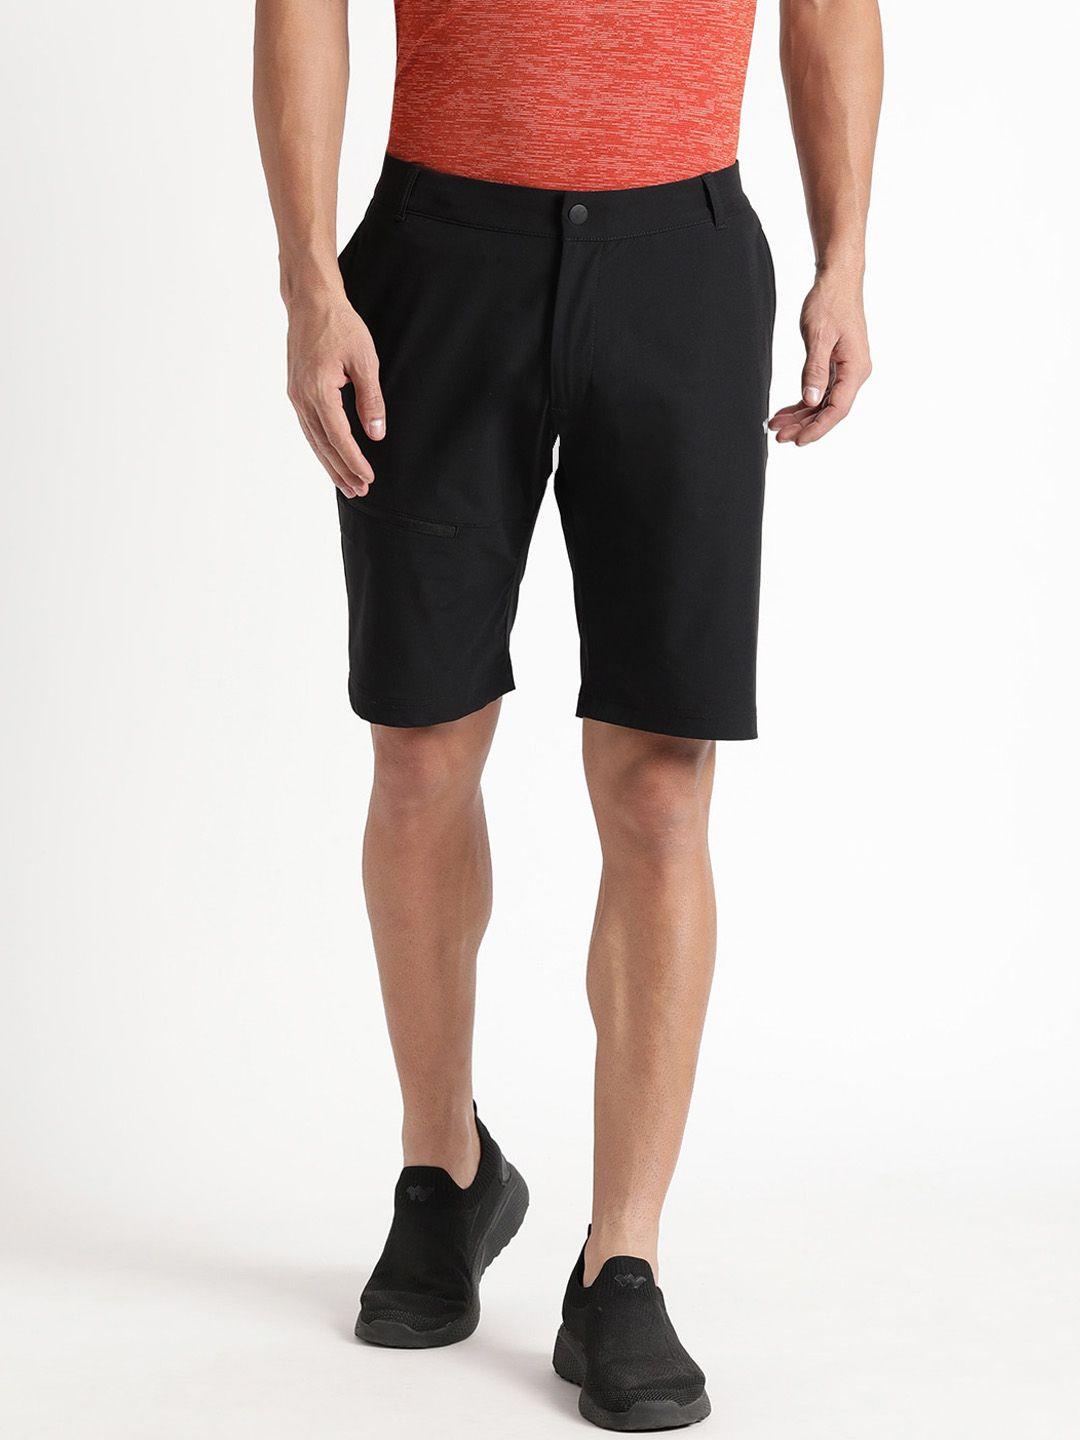 wildcraft men rapid-dry mid-rise shorts